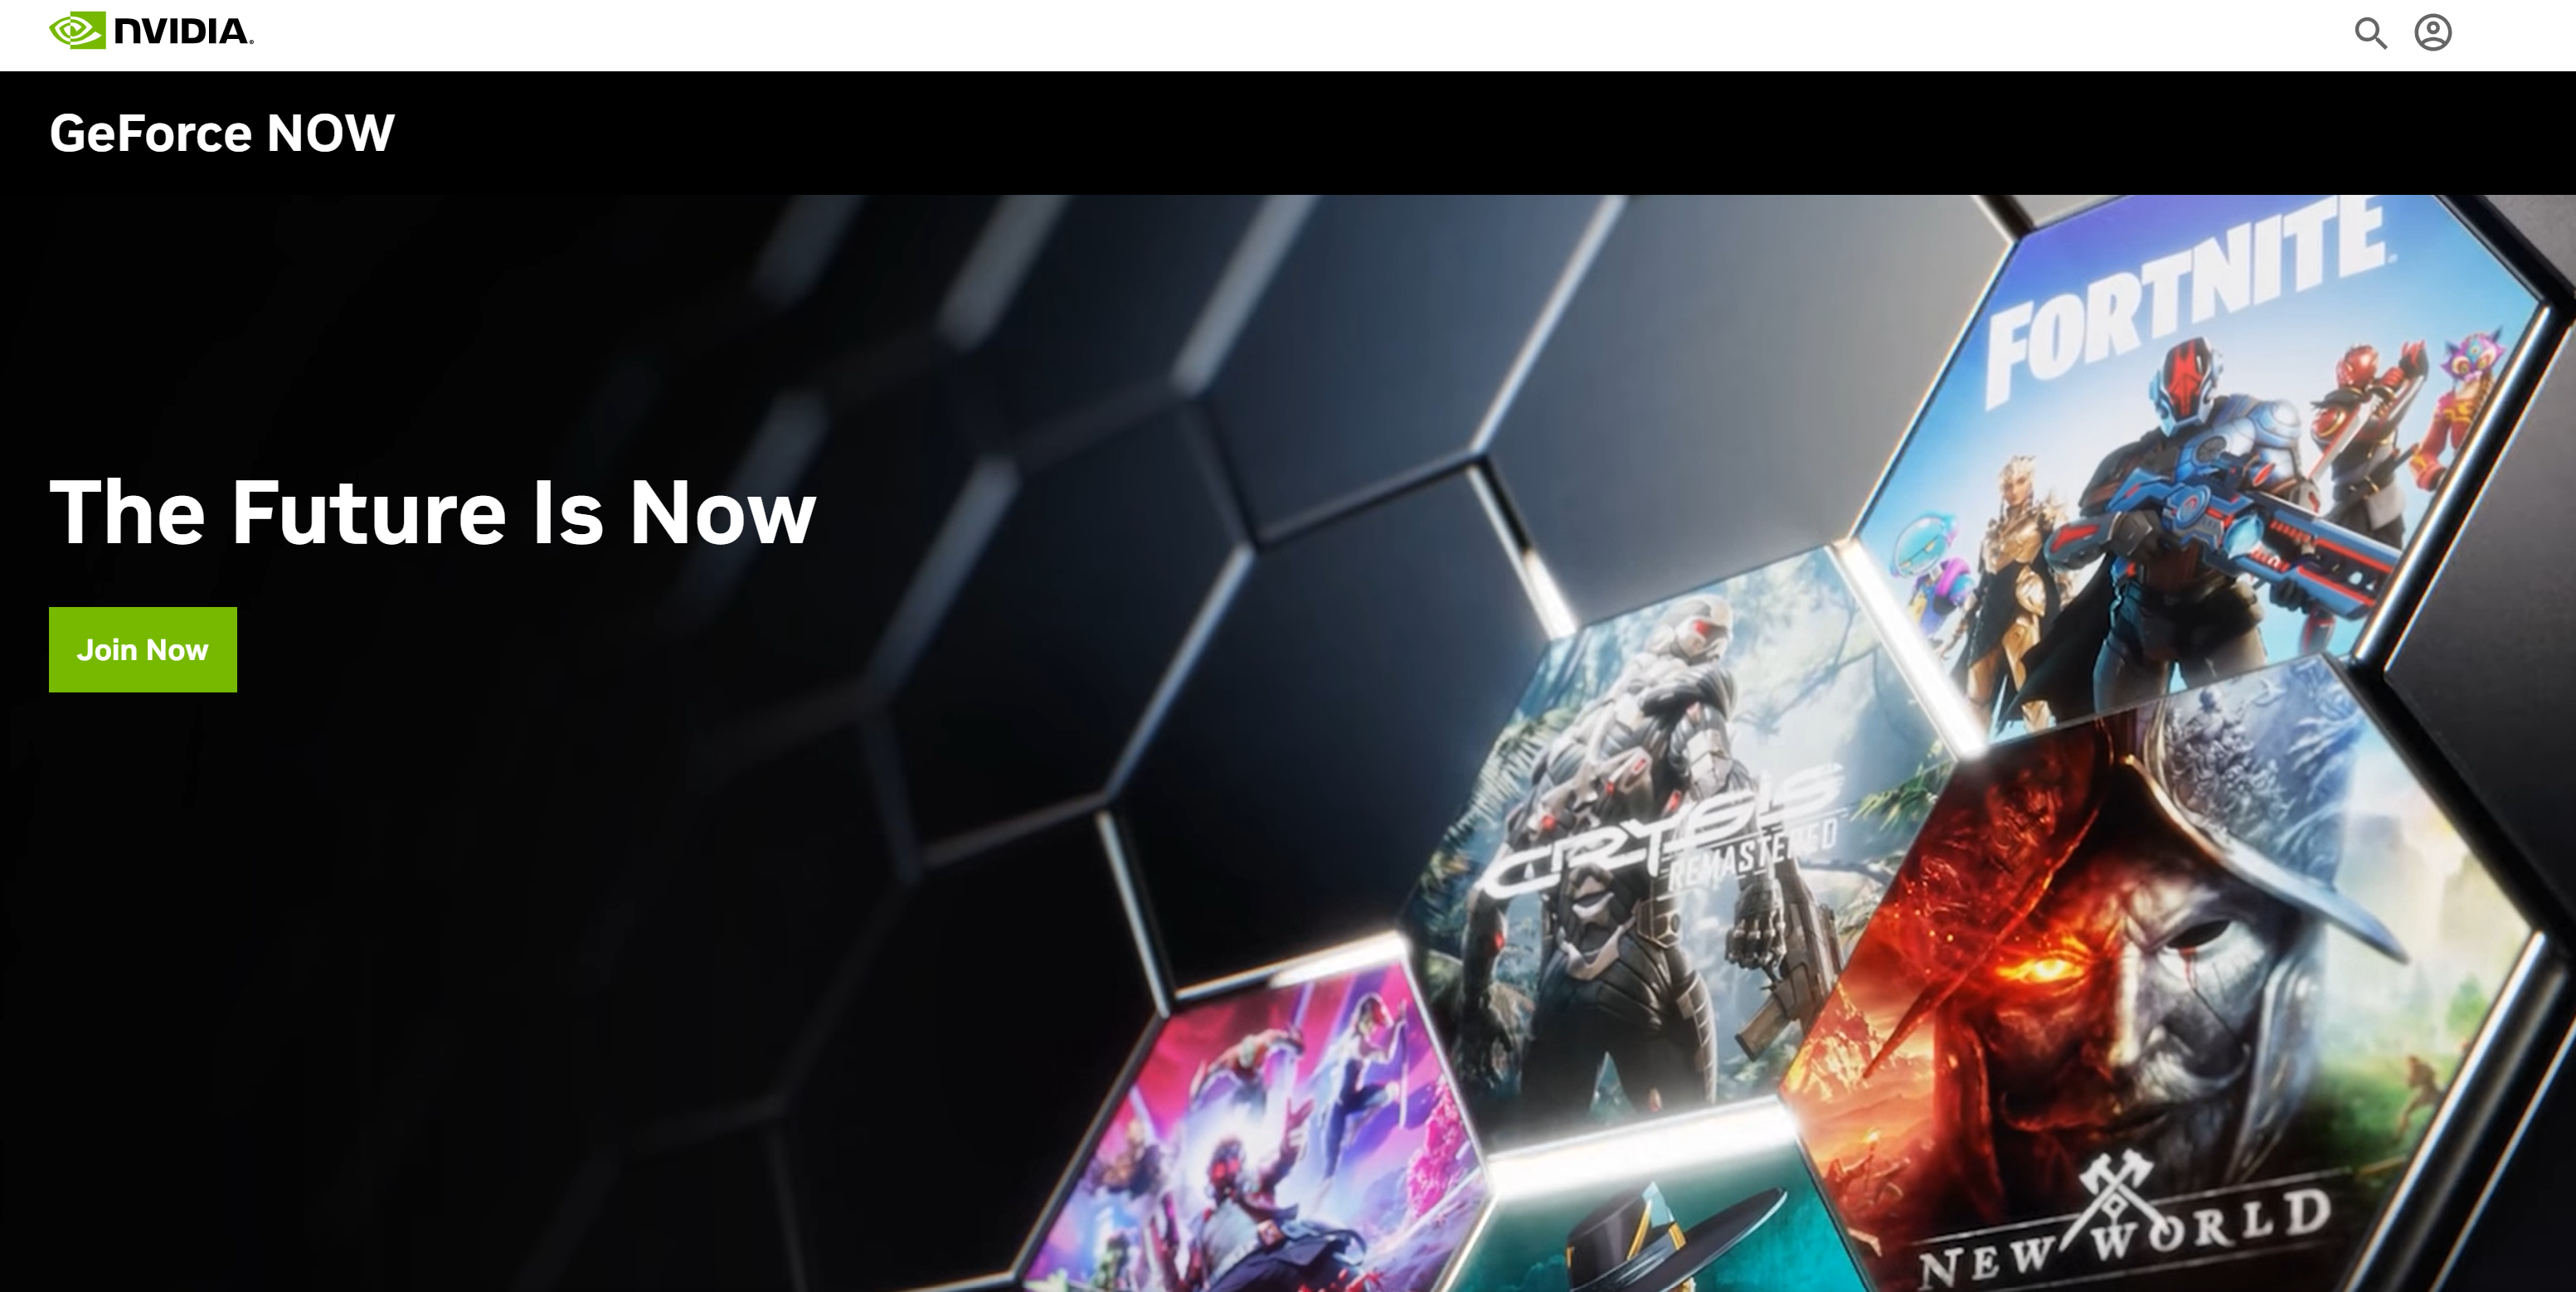 Yes 5G与NVIDIAz推介云游戏服务GeForce NOW 3